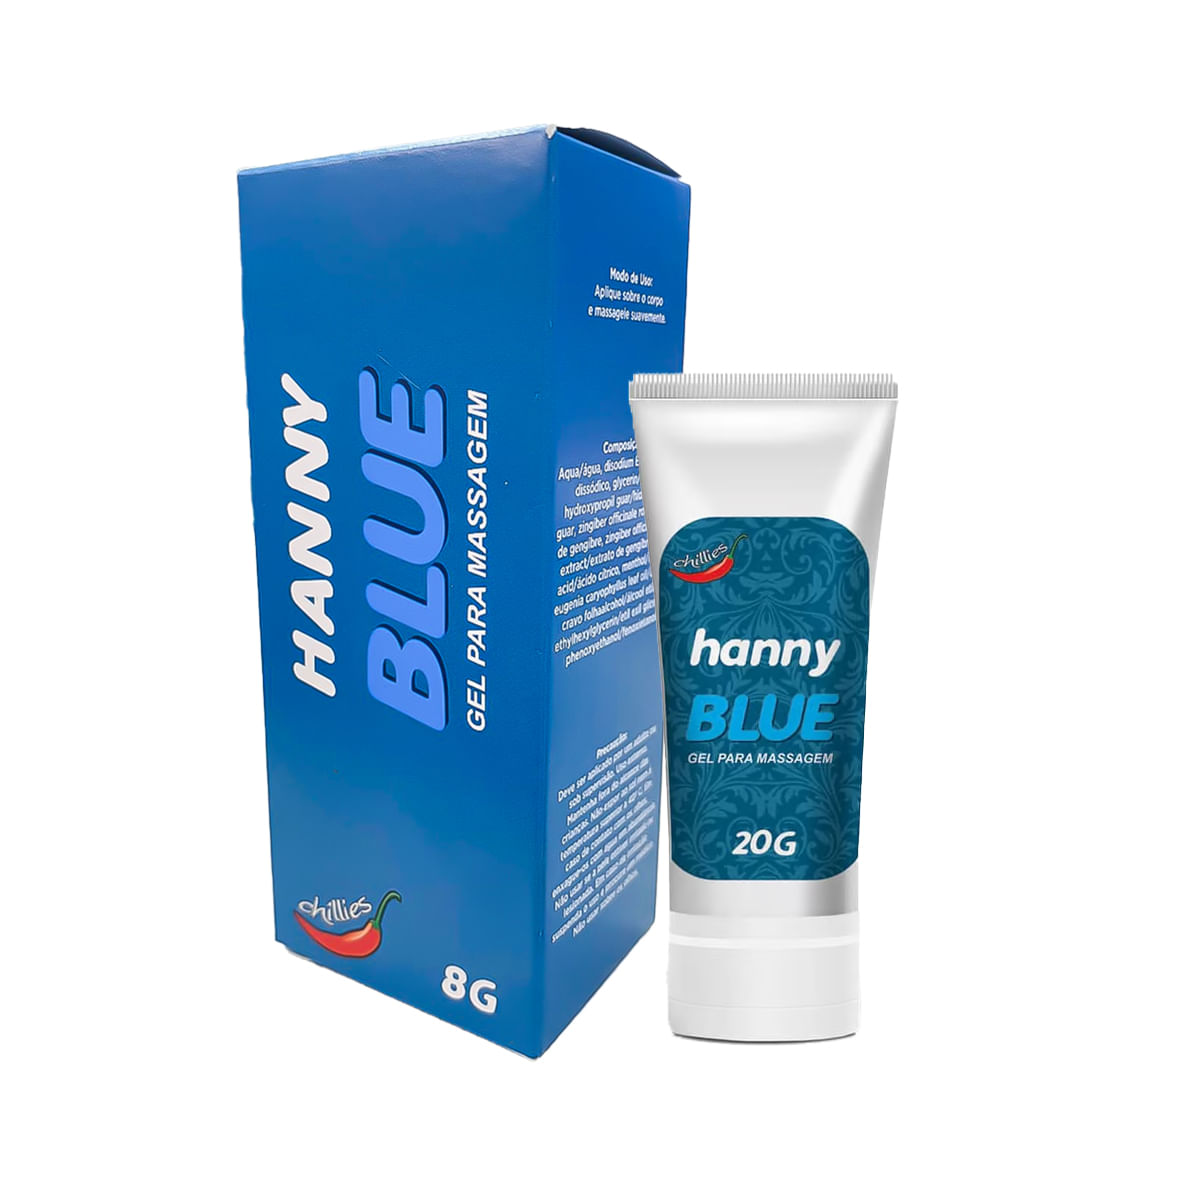 Hanny Blue Gel Anestésico Corporal 20g Chillies